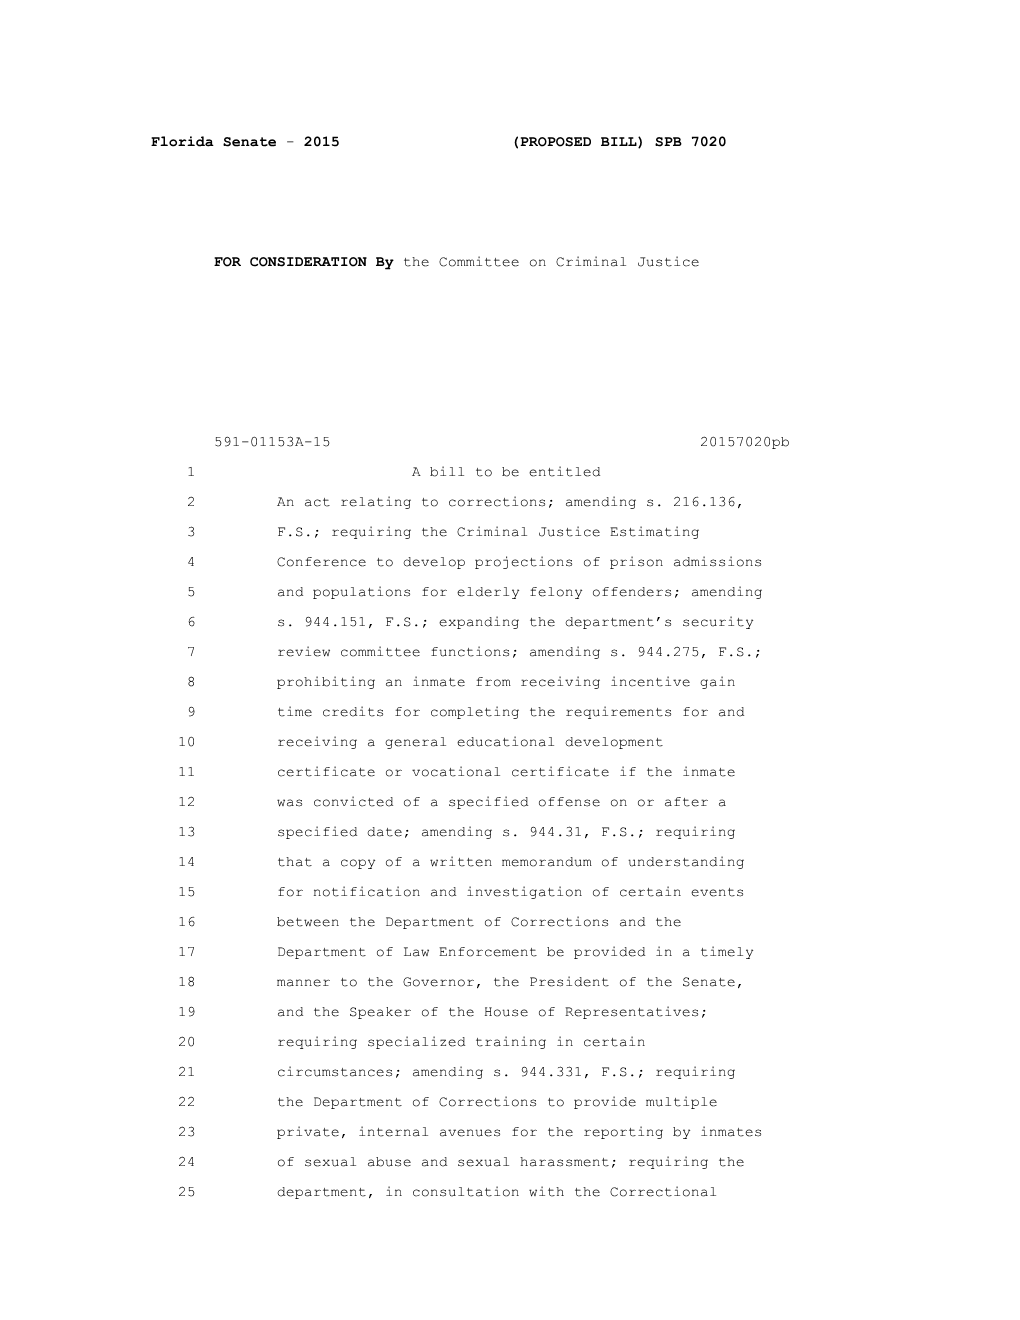 Florida Senate - 2015 (PROPOSED BILL) SPB 7020